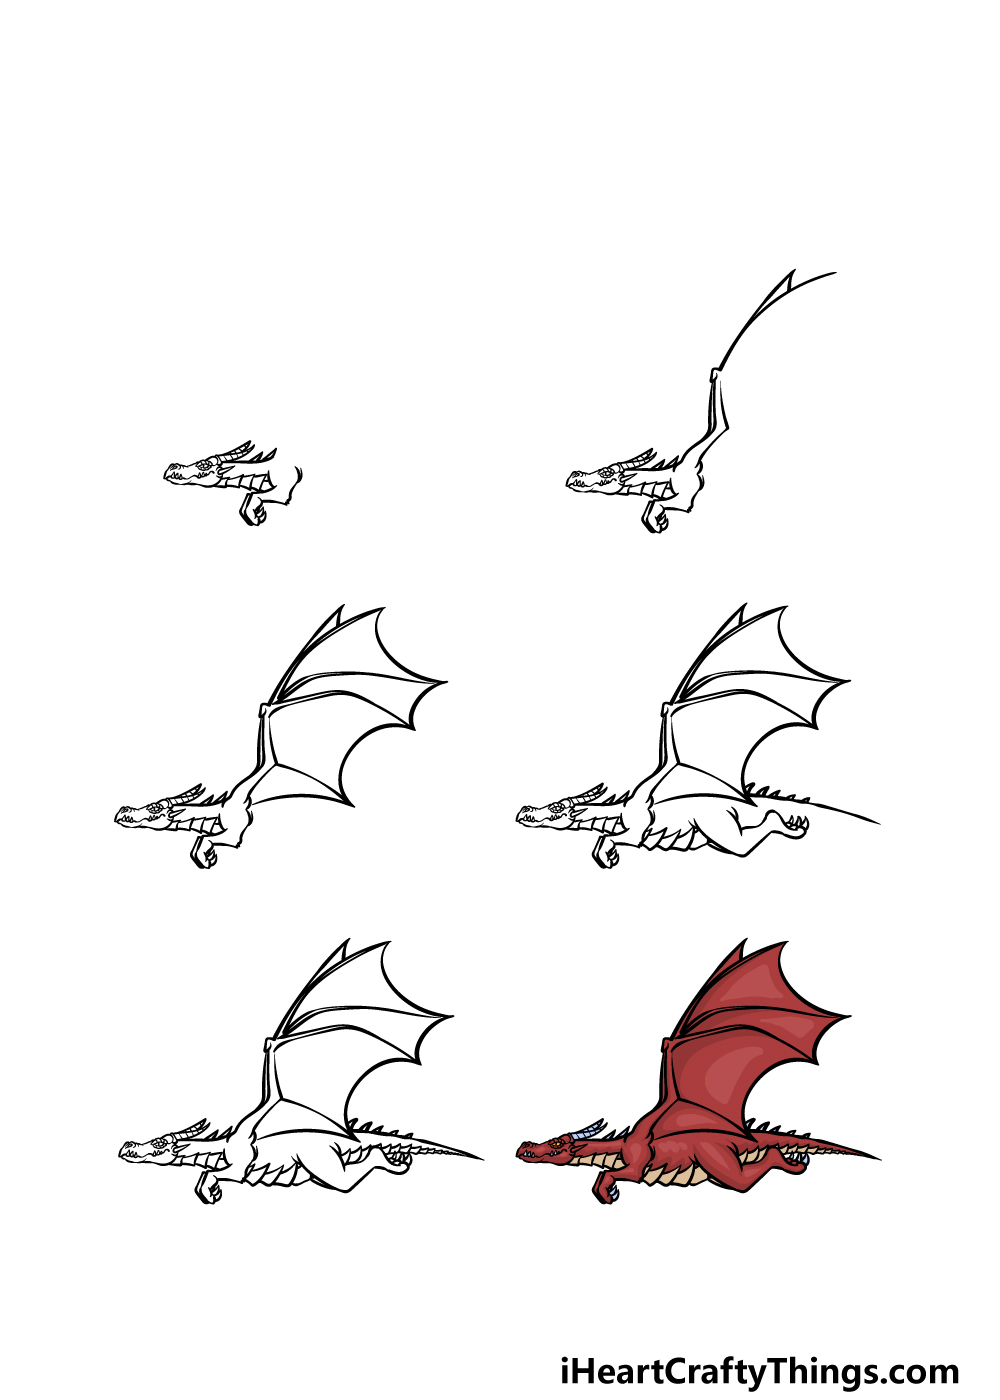 Cute dragon sketch - Sketches For you | OpenSea